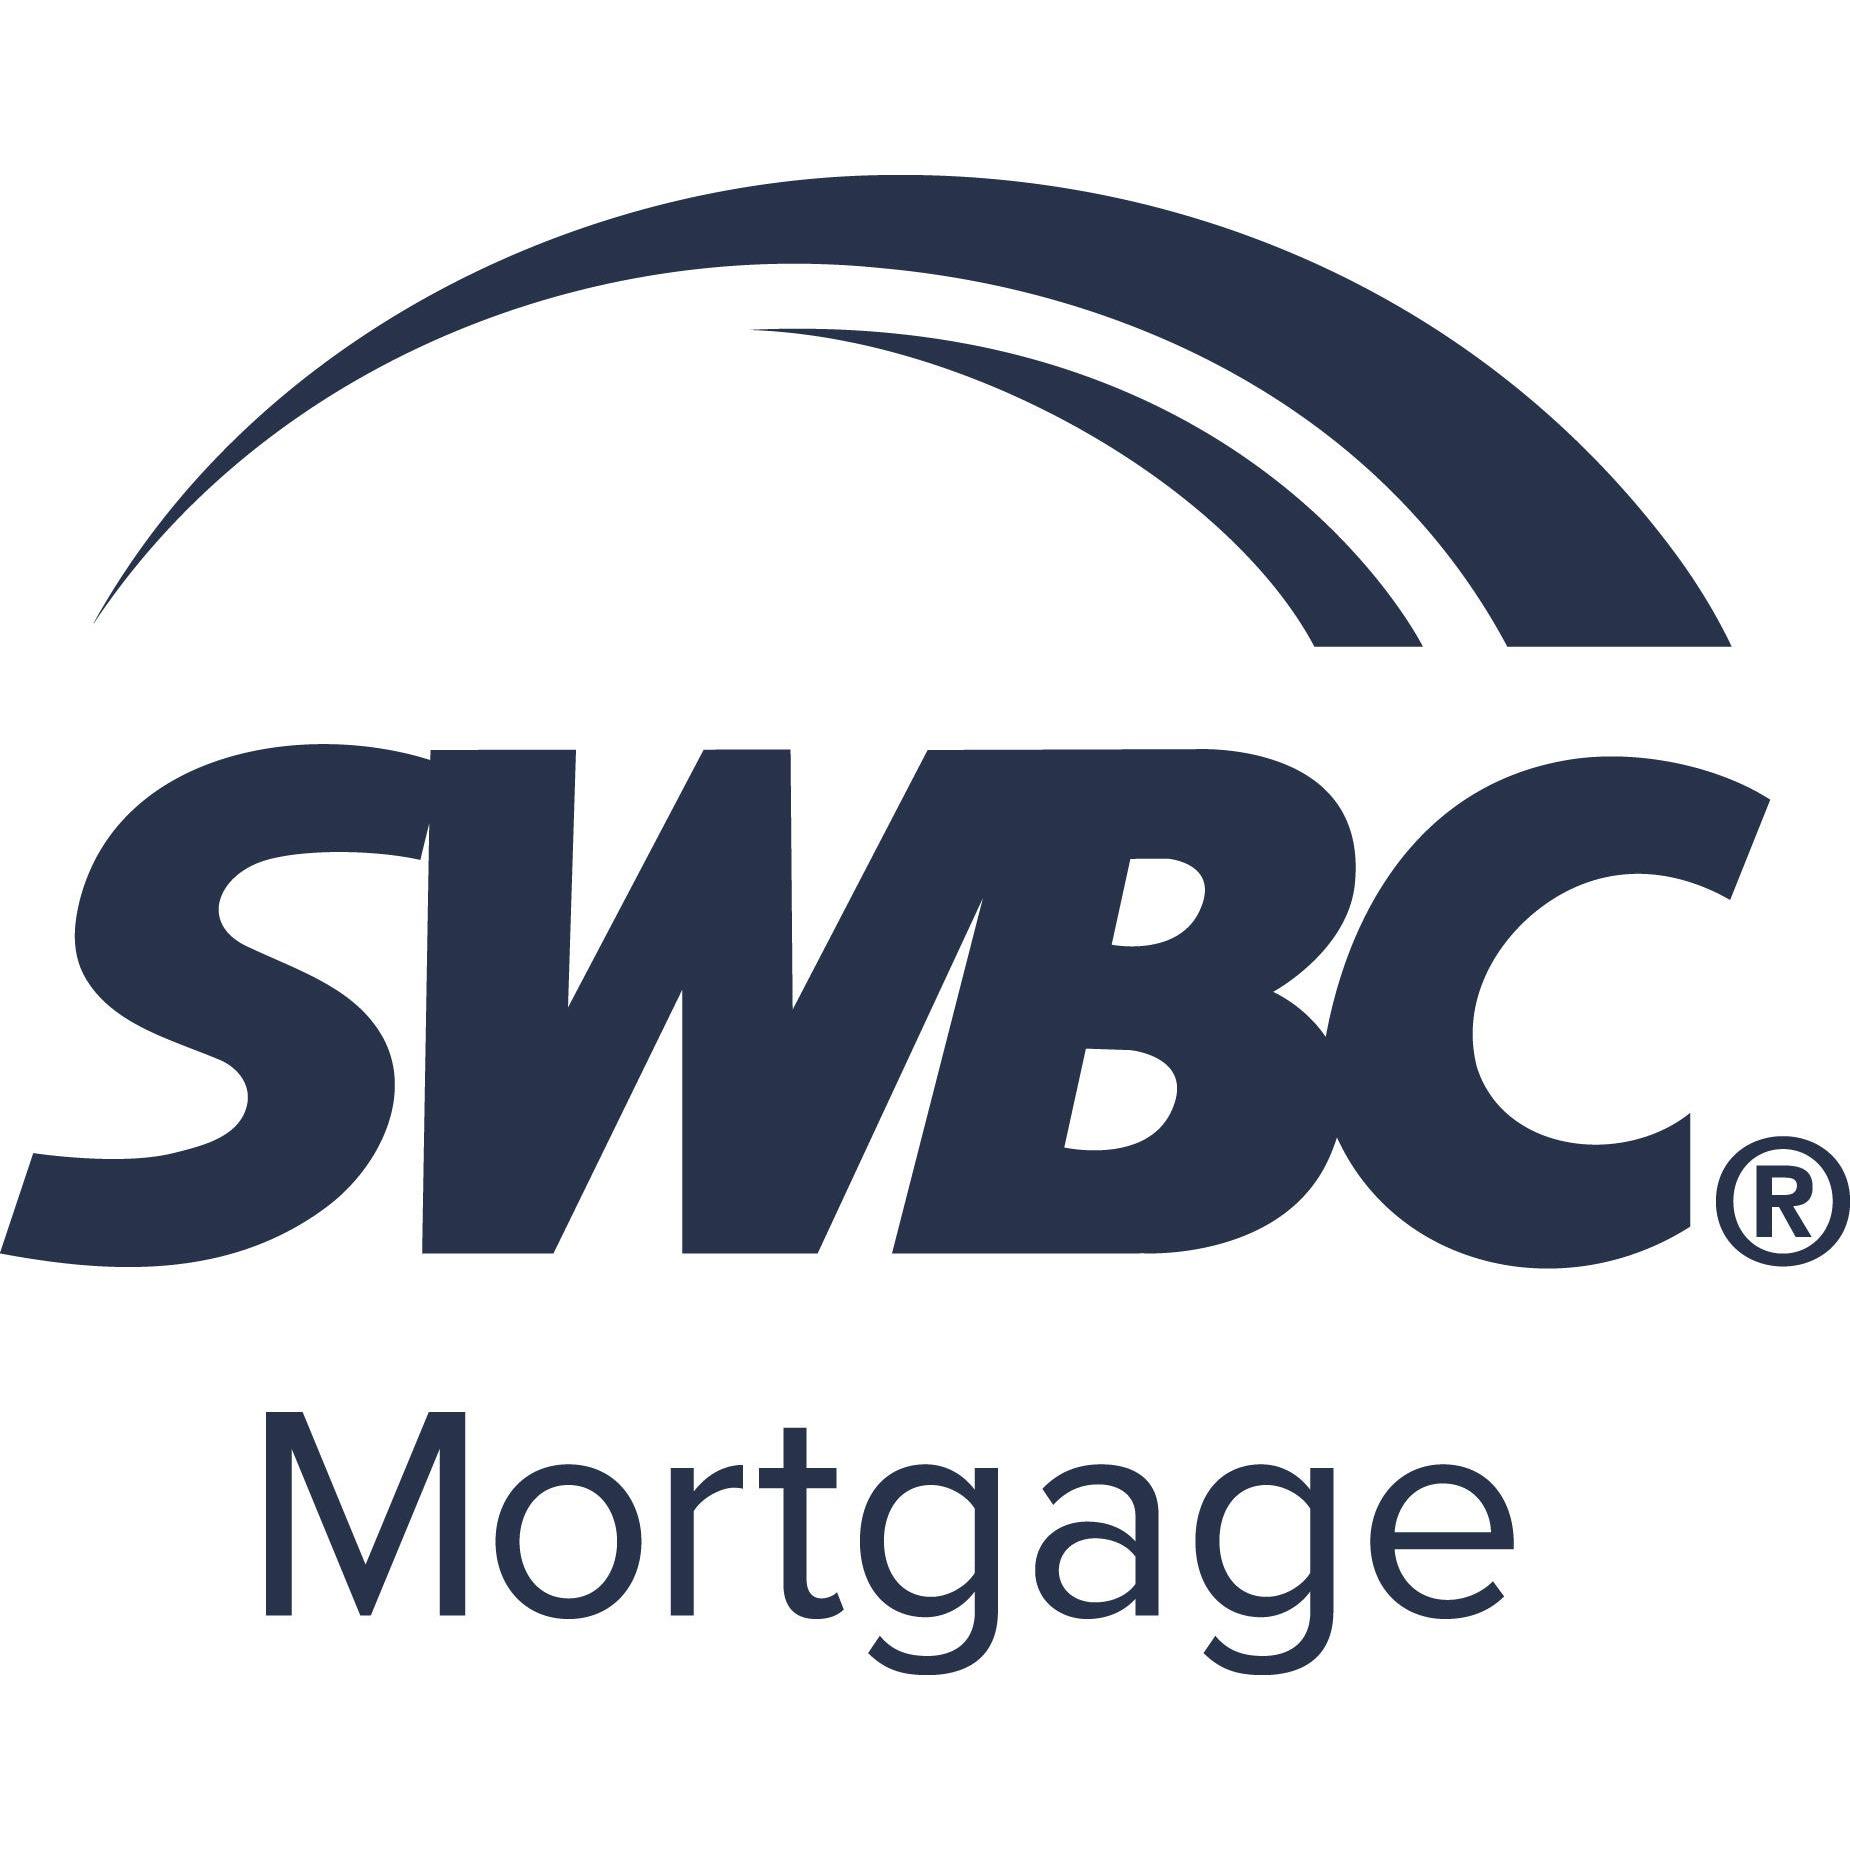 Steve Maynes, SWBC Mortgage